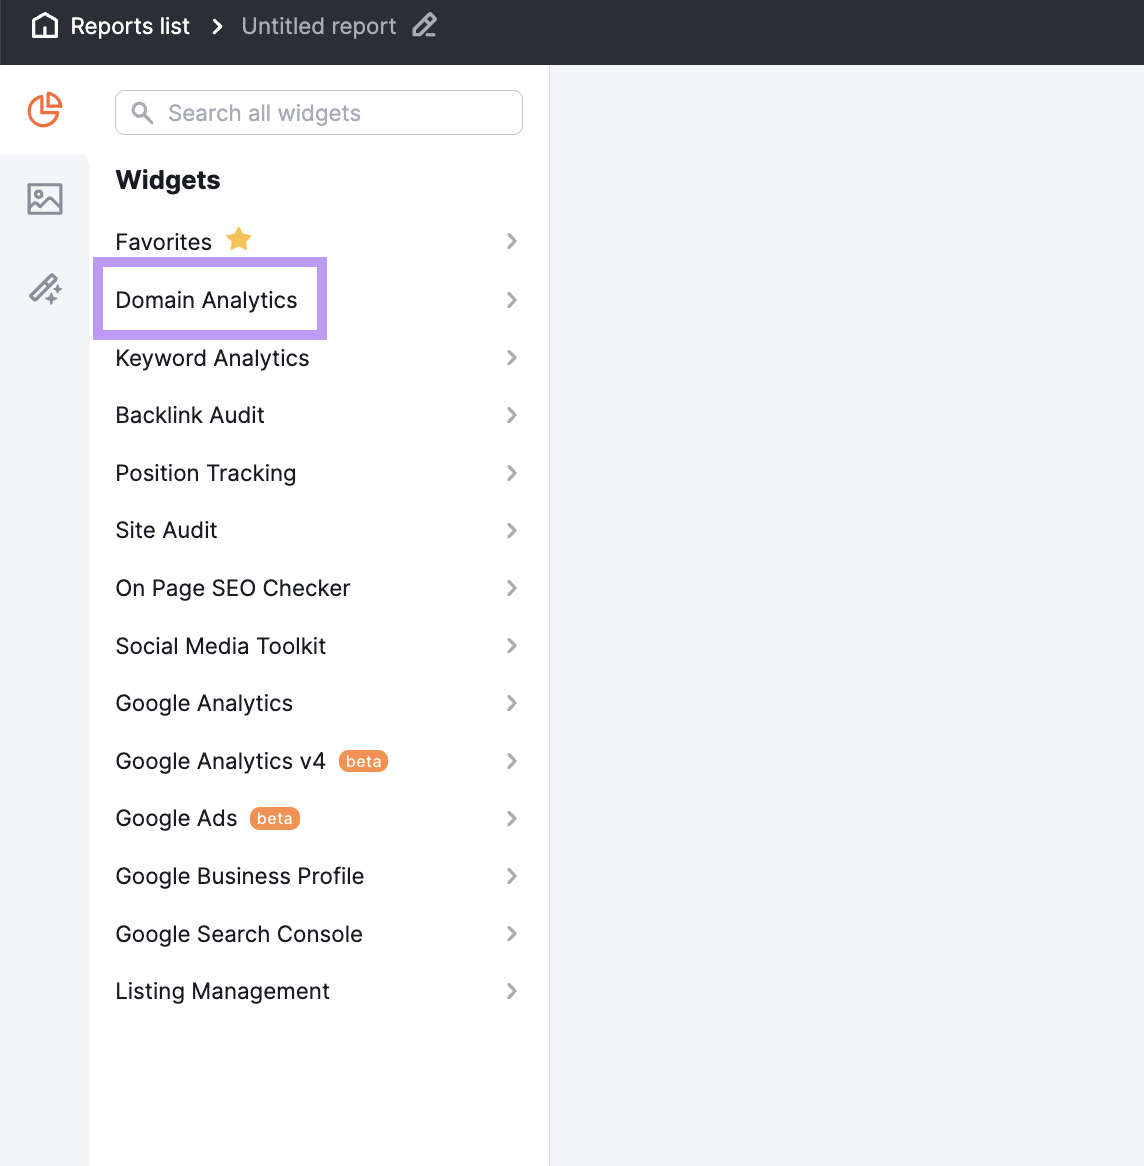 "Domain Analytics" highlighted under Widgets menu